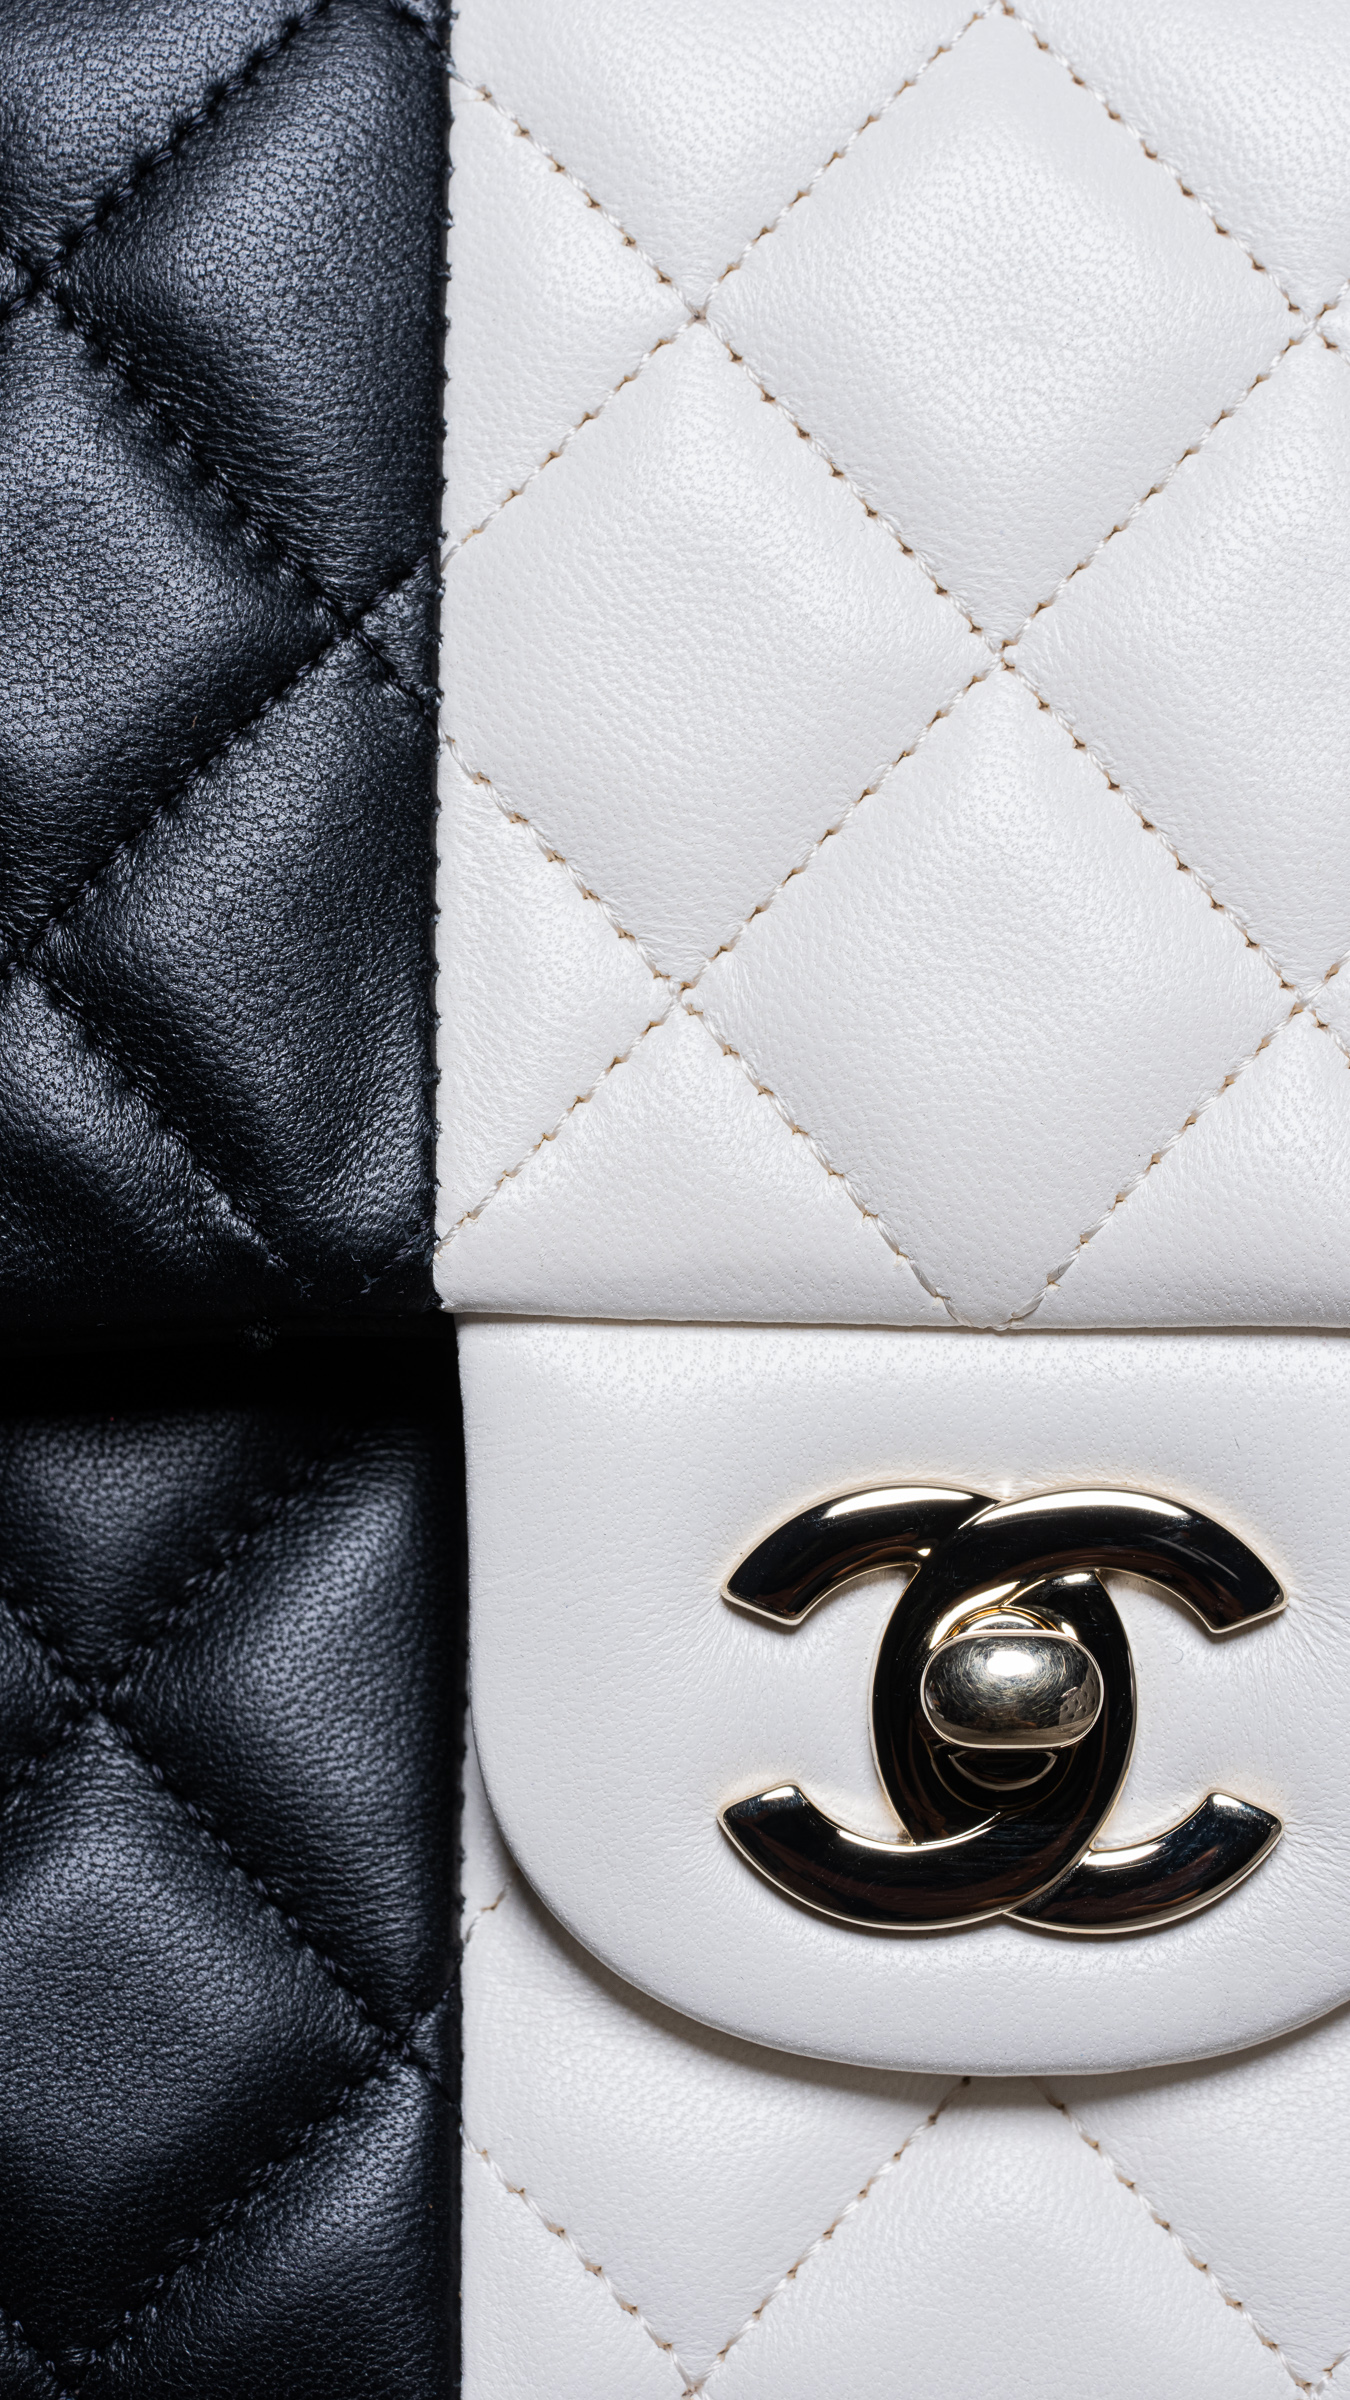 PurseBlog: Your First Look at the Brand New Prada Emblème Bag